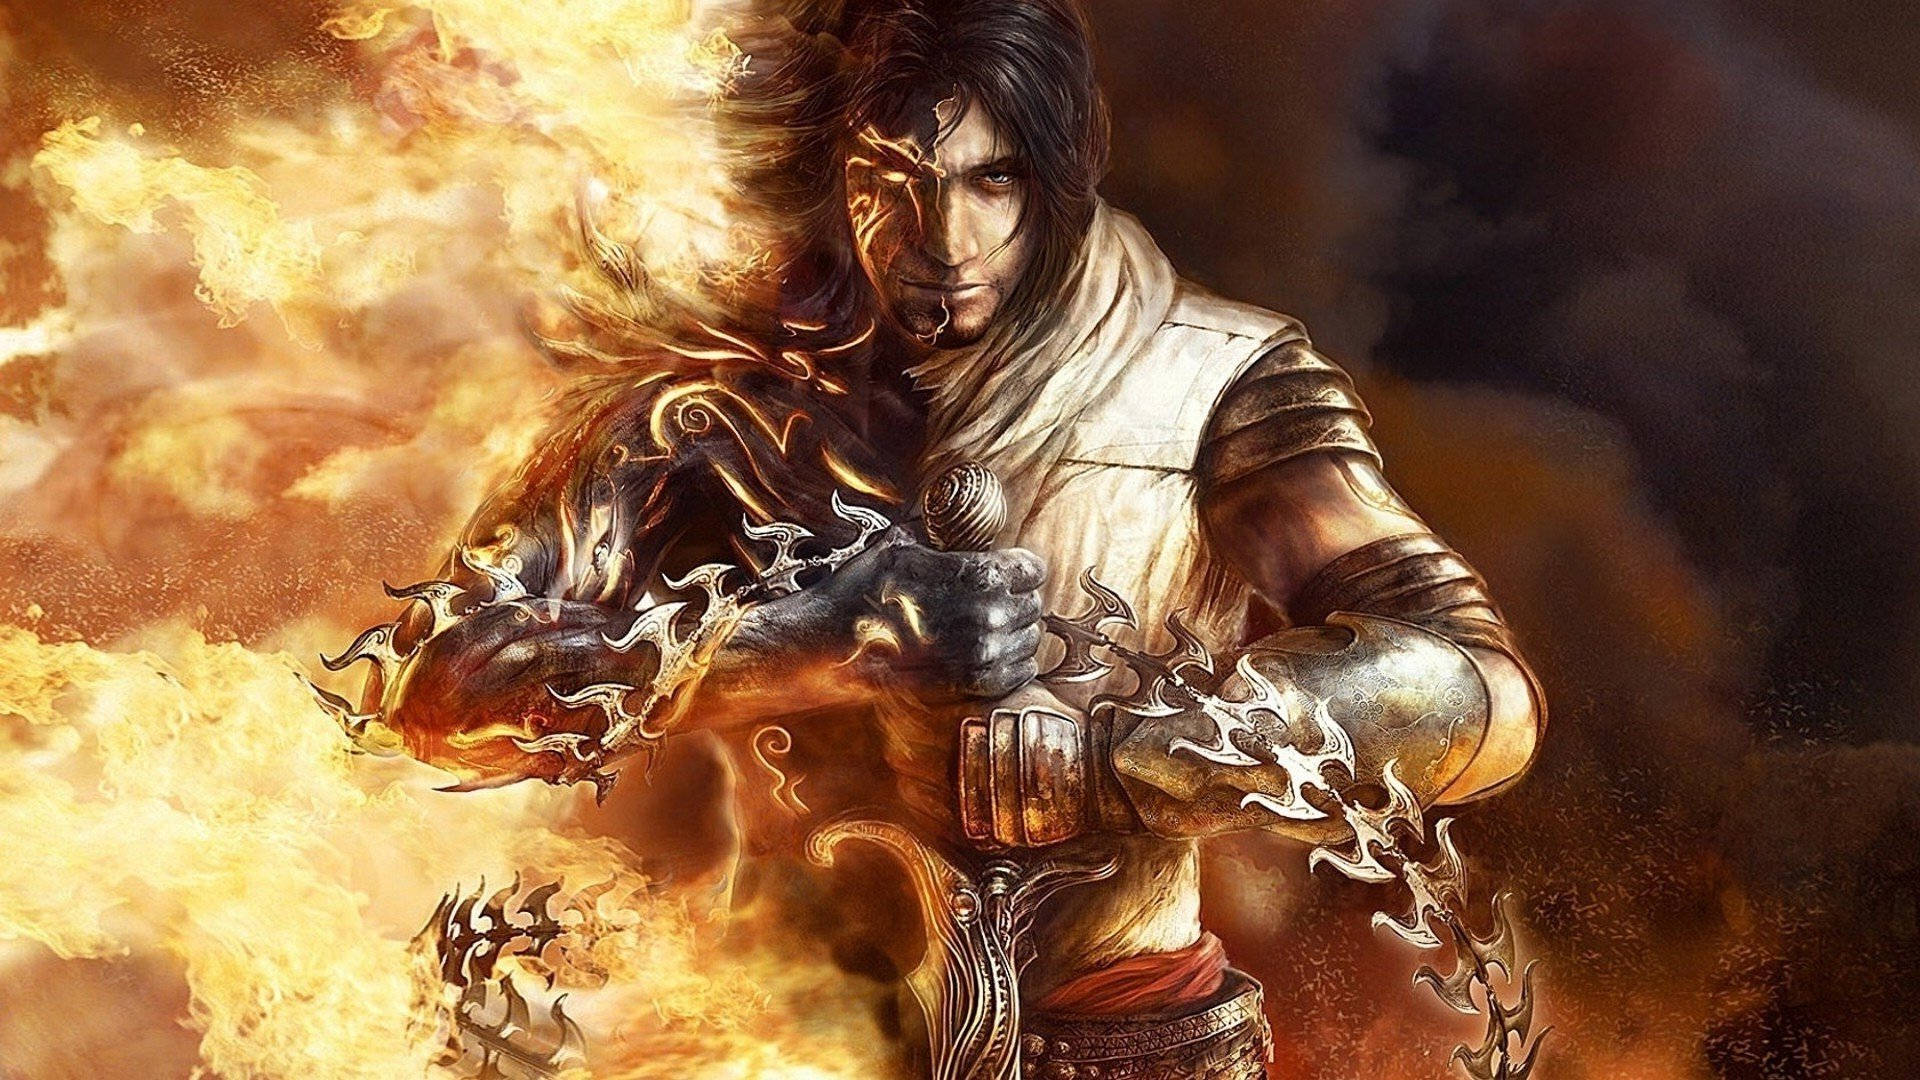 Free Prince Of Persia Wallpaper Downloads, [100+] Prince Of Persia  Wallpapers for FREE 